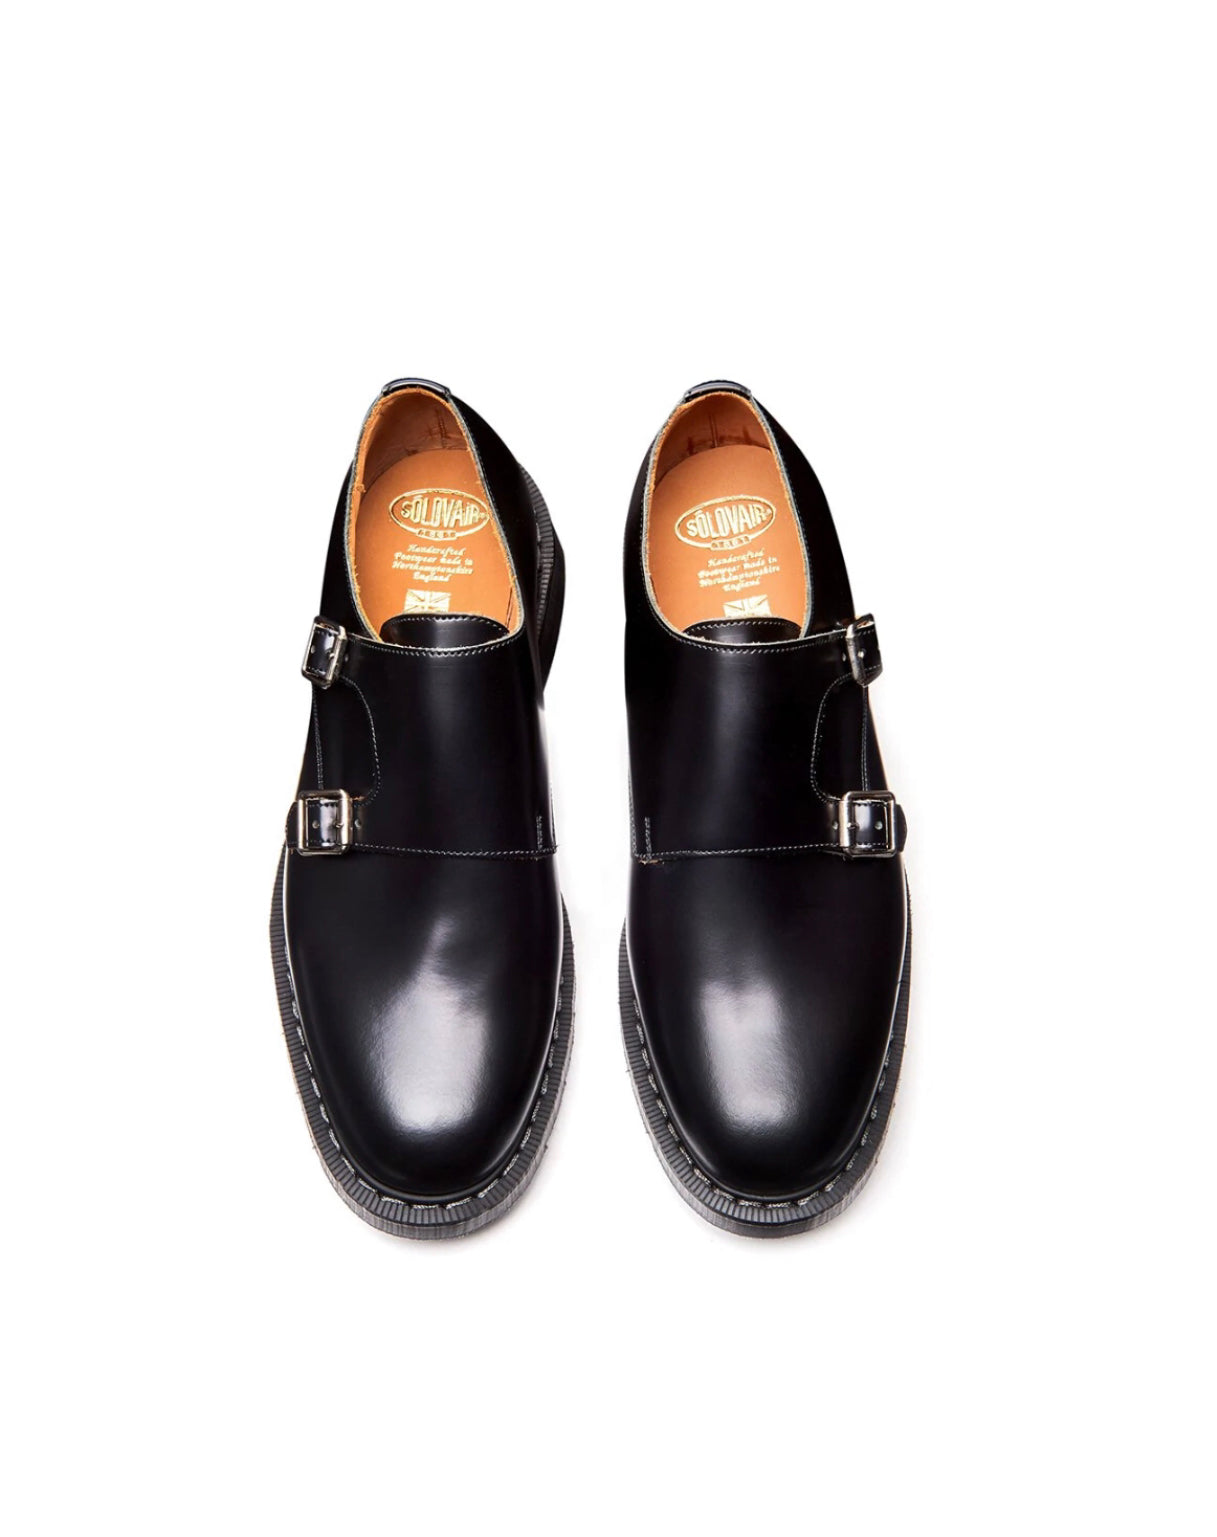 Solovair Black Hi Shine Double Buckle Monk Shoe Made In England